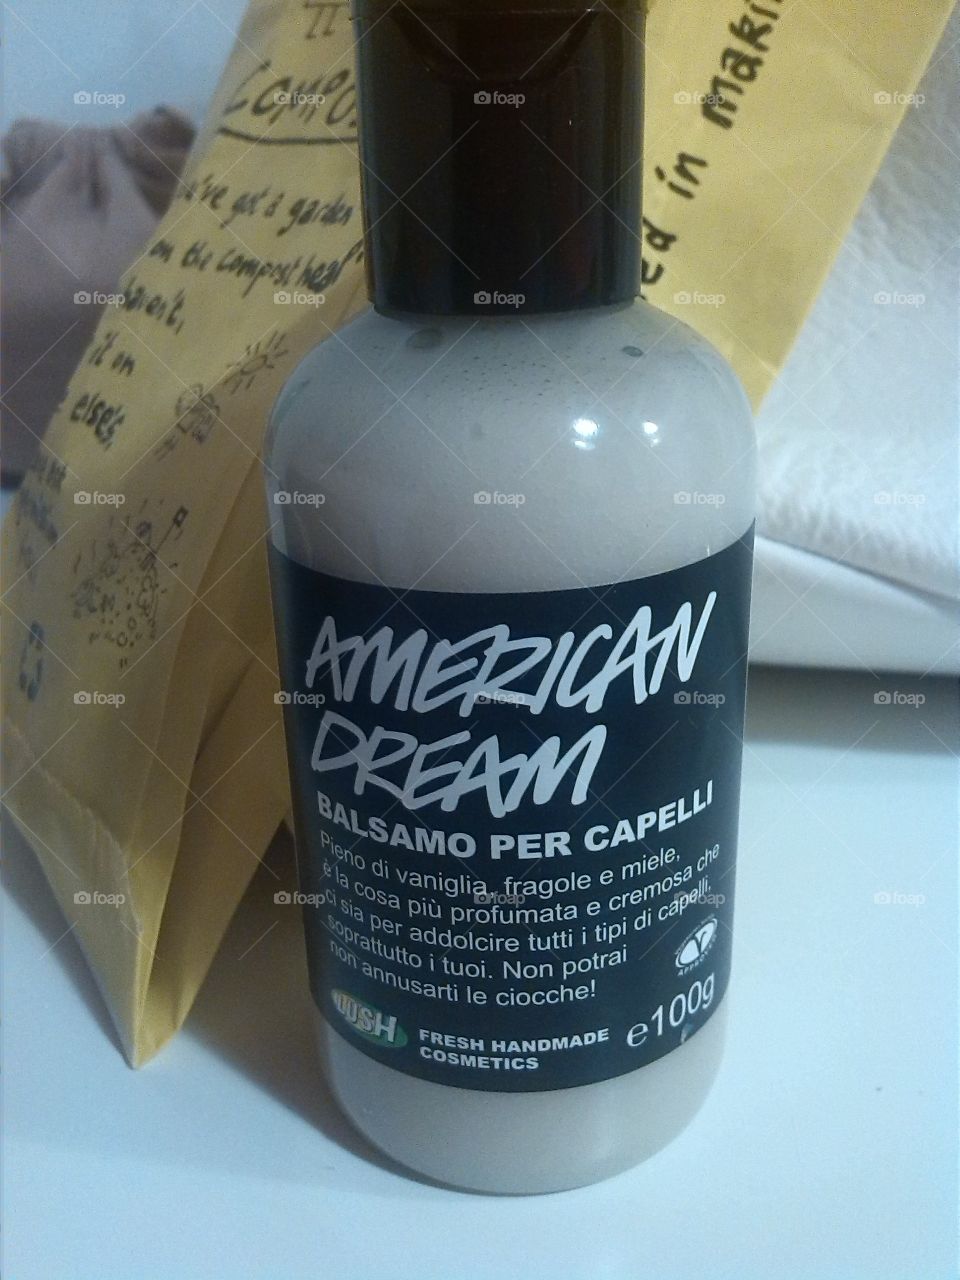 American dream, lush cream